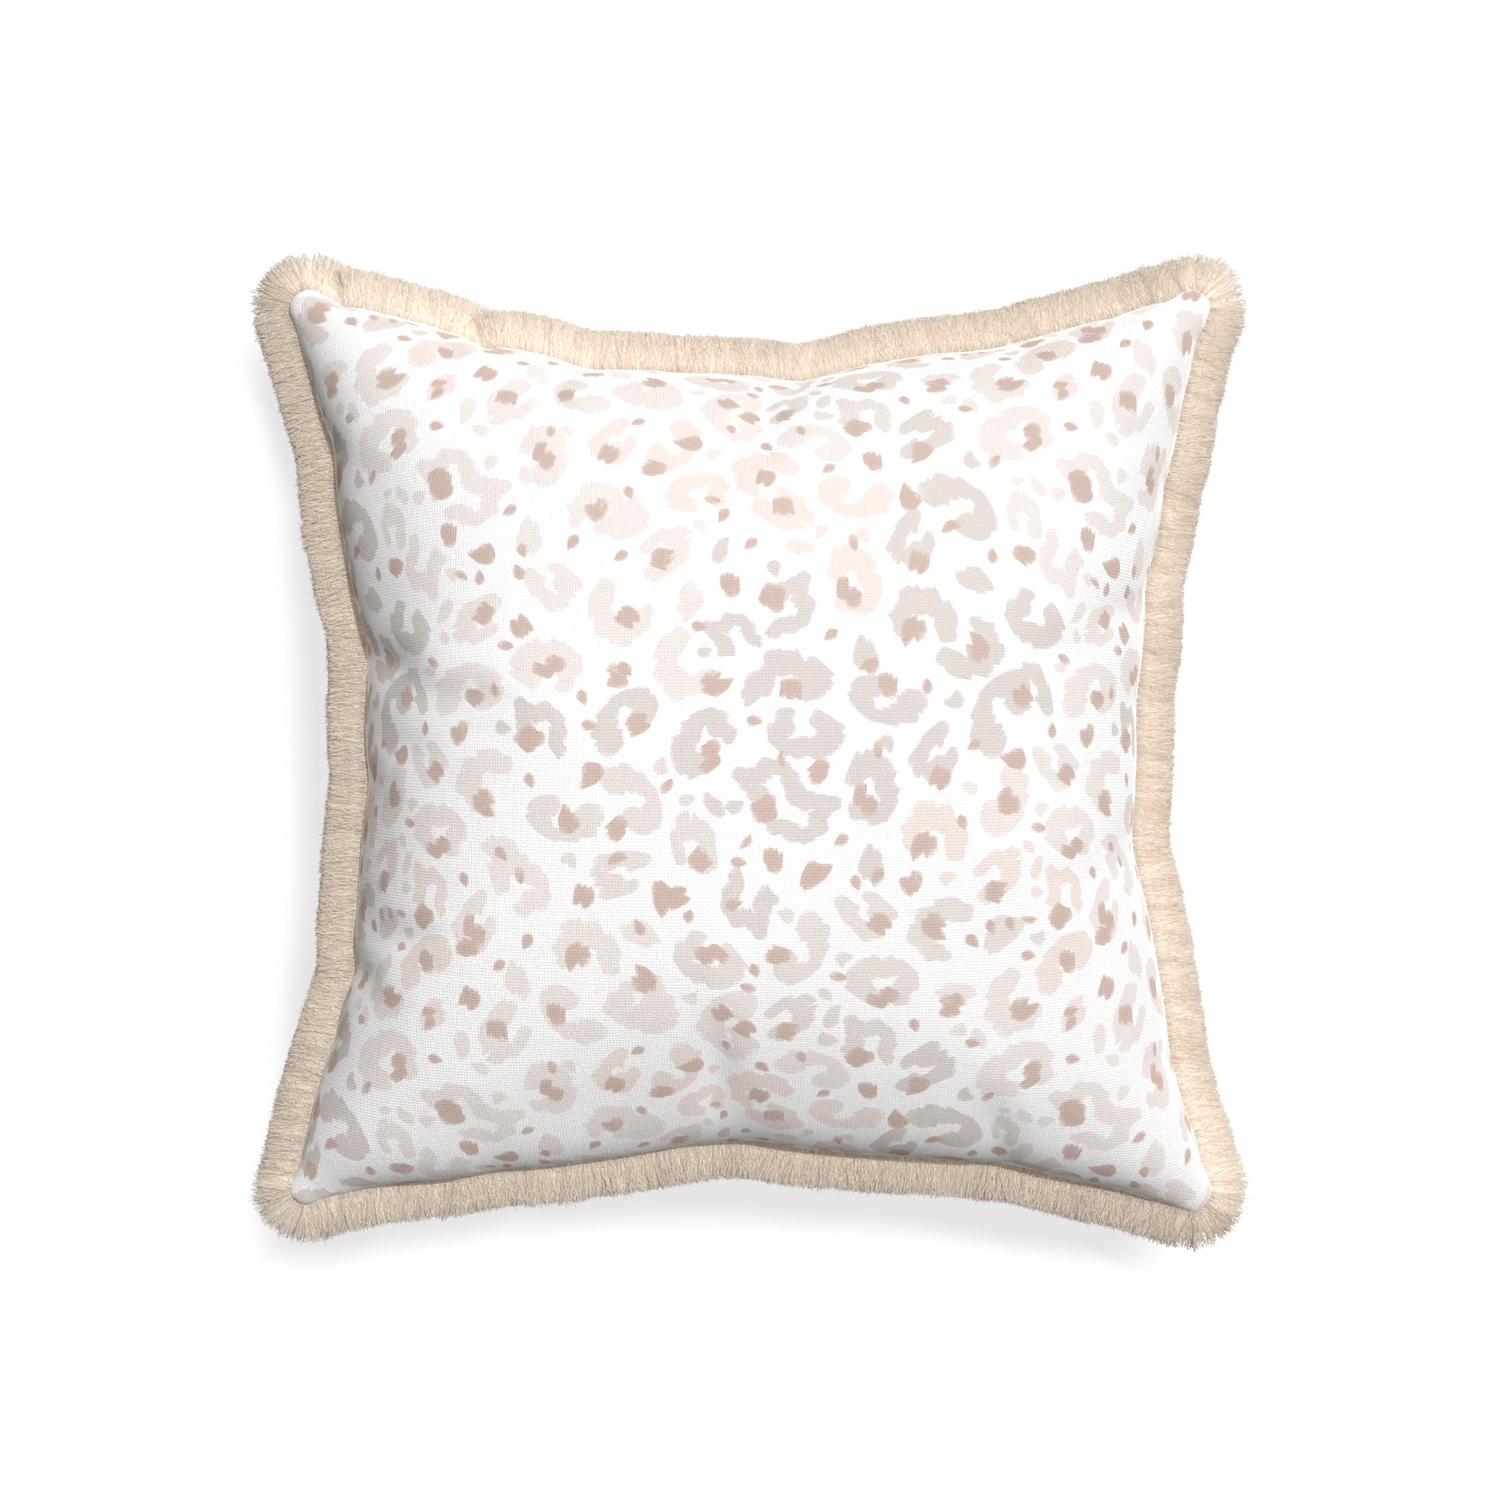 20-square rosie custom pillow with cream fringe on white background